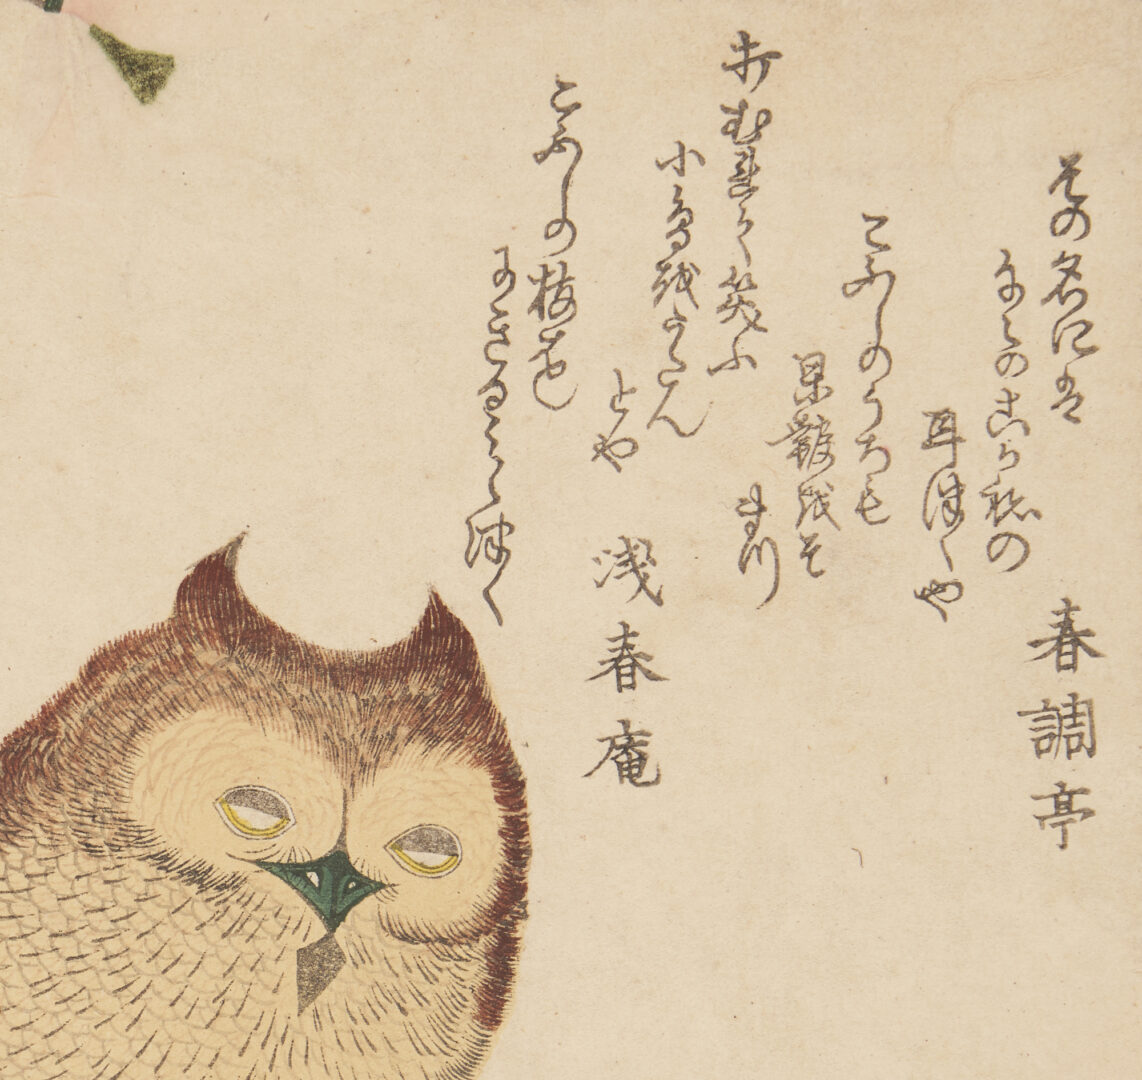 Lot 14: Kubo Shunman Japanese Woodblock Print, Horned Owl on Flowering Branch, c. 1800